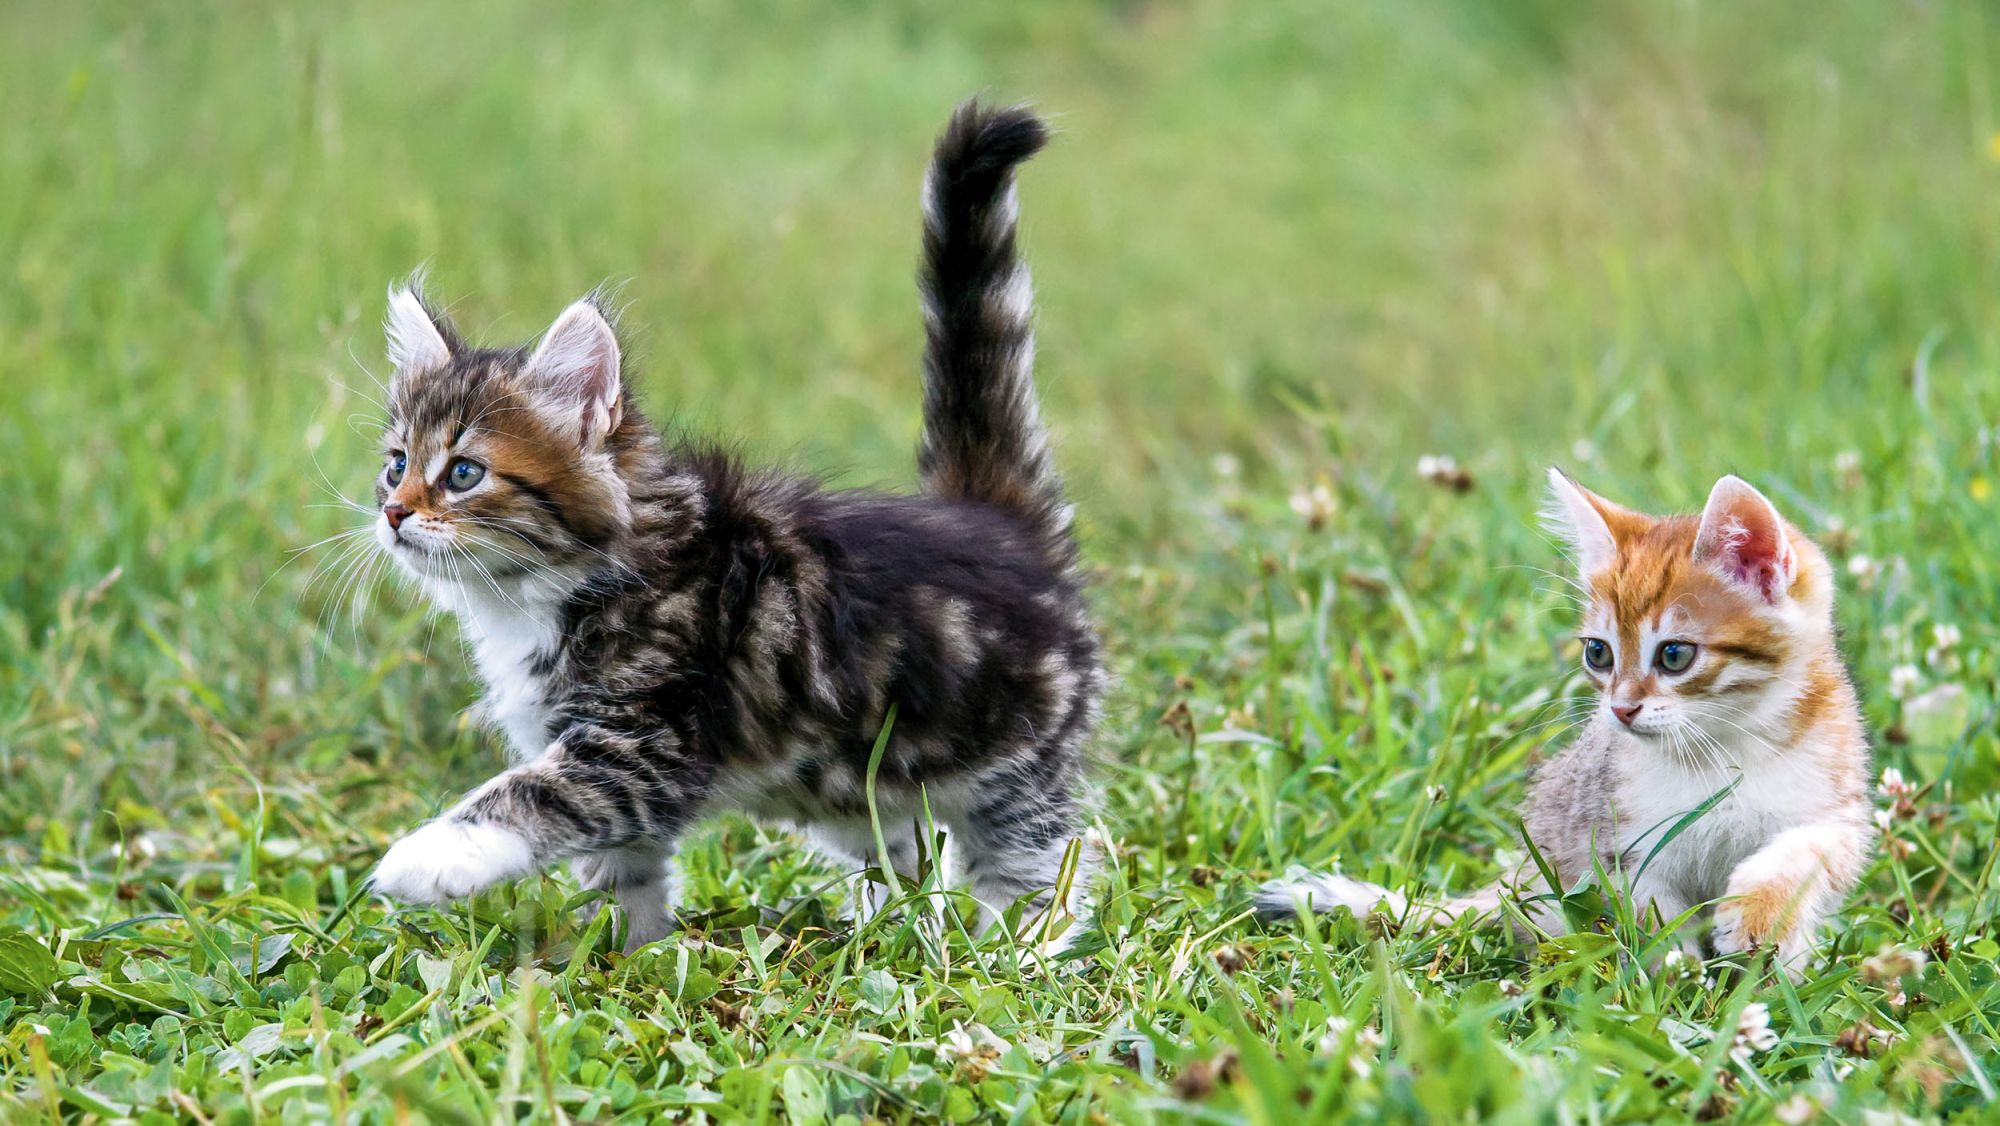 Two kittens running outside on grass